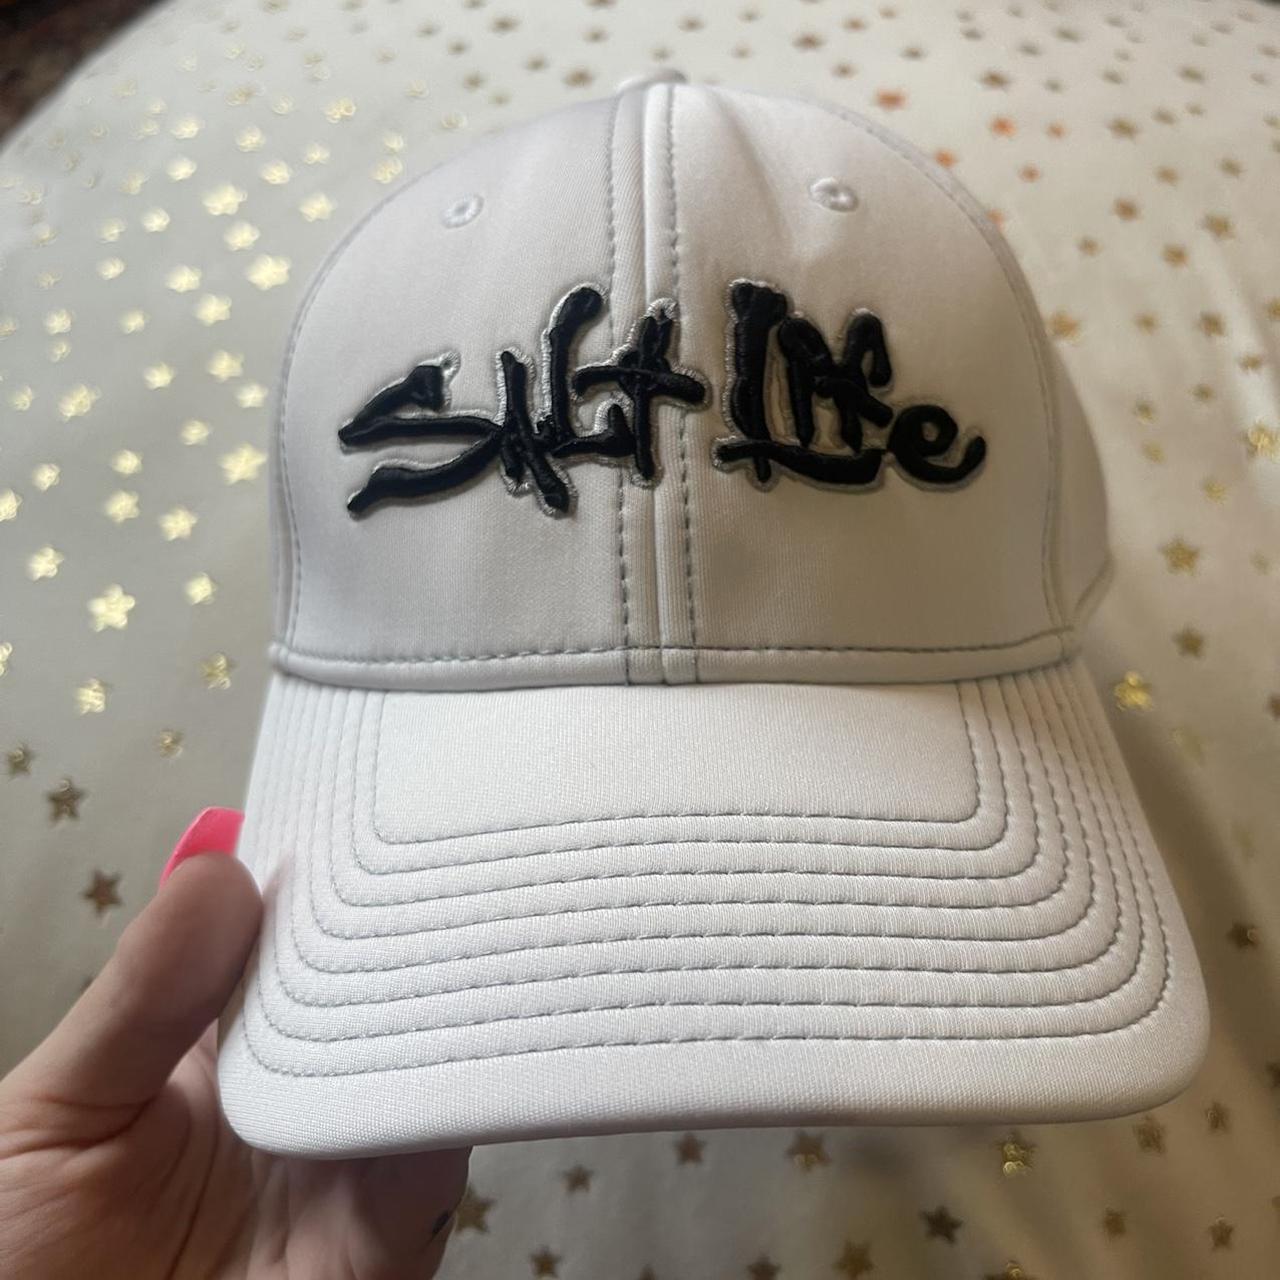 Salt Life Technical Signature Trucker Hat